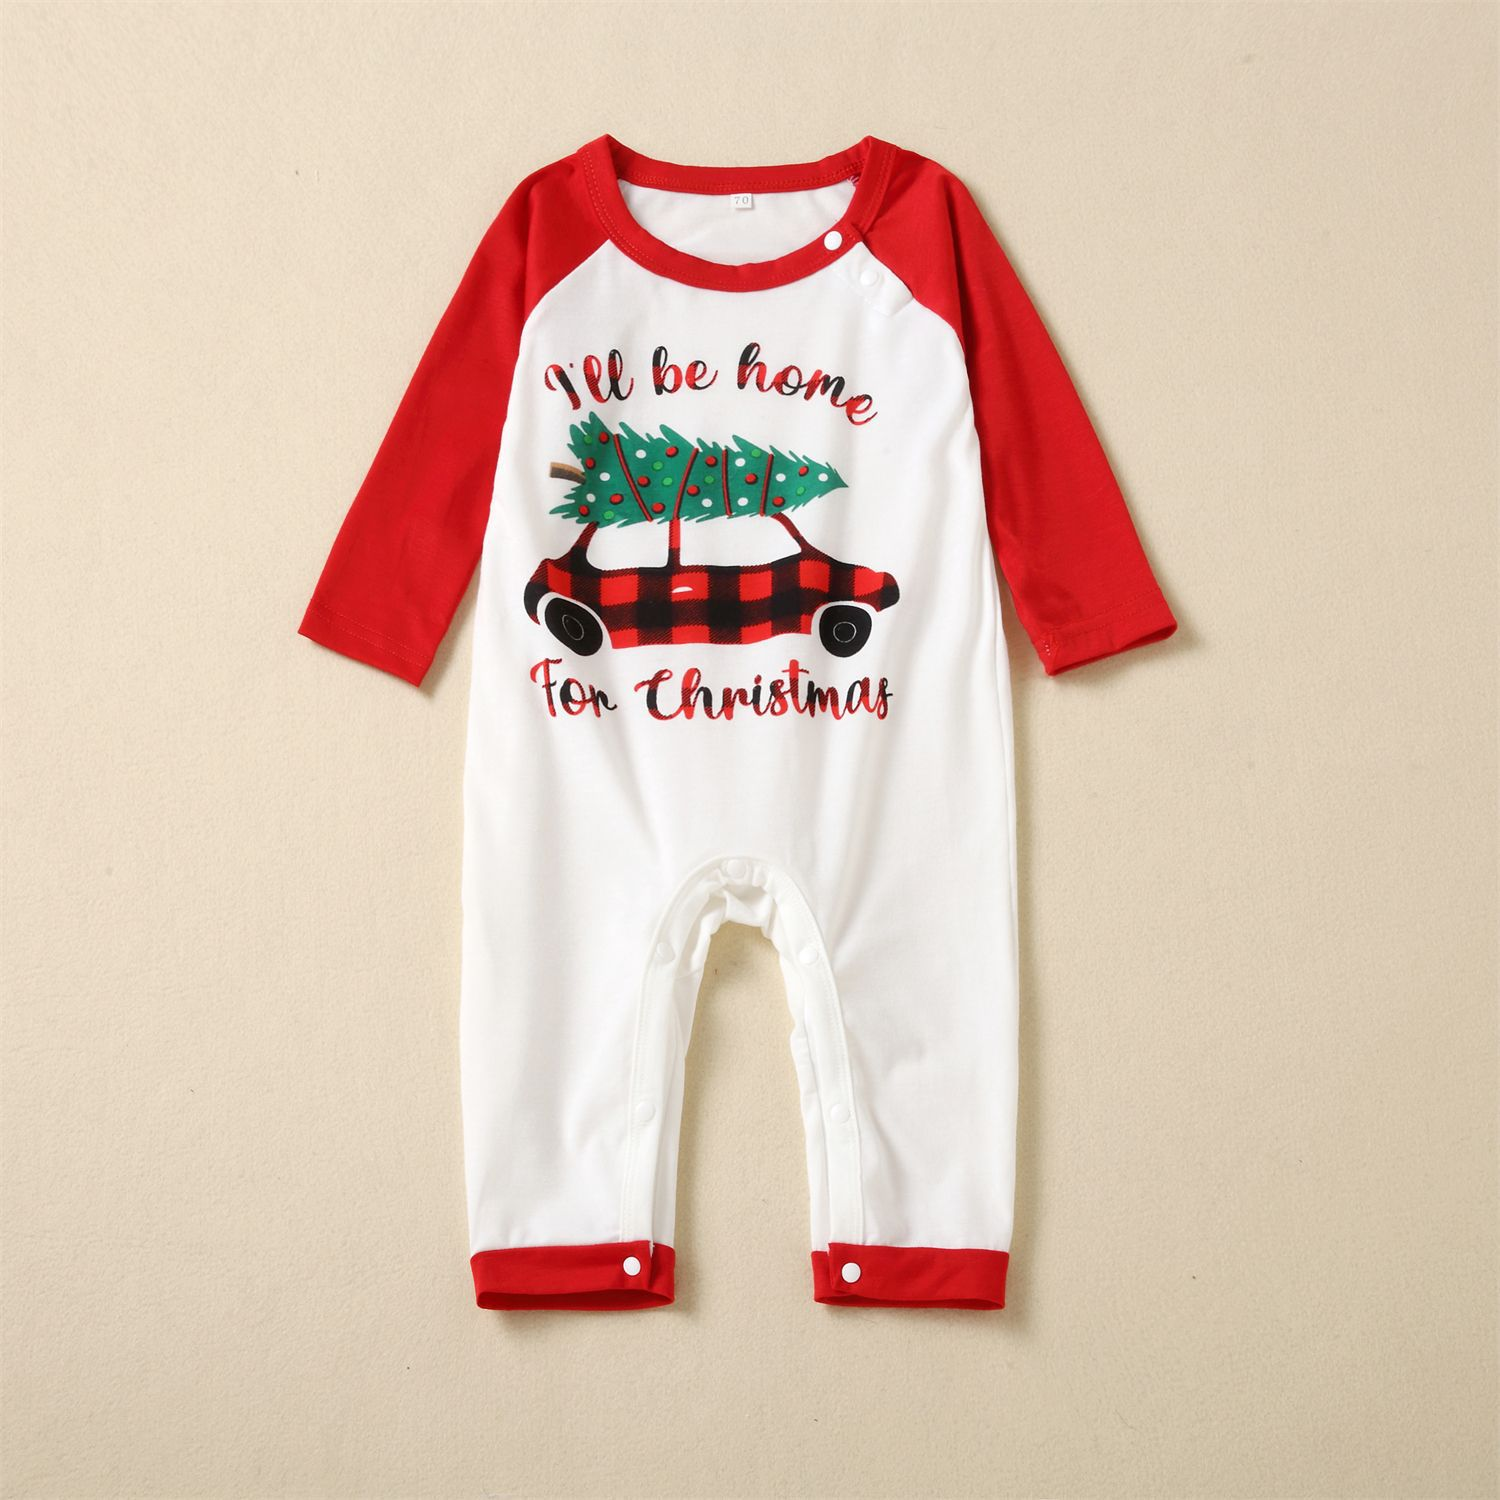 Red 'I Wll Be Home From Christmas' Printed Plaid Christmas Family Matching Long-sleeve Pajamas Sets